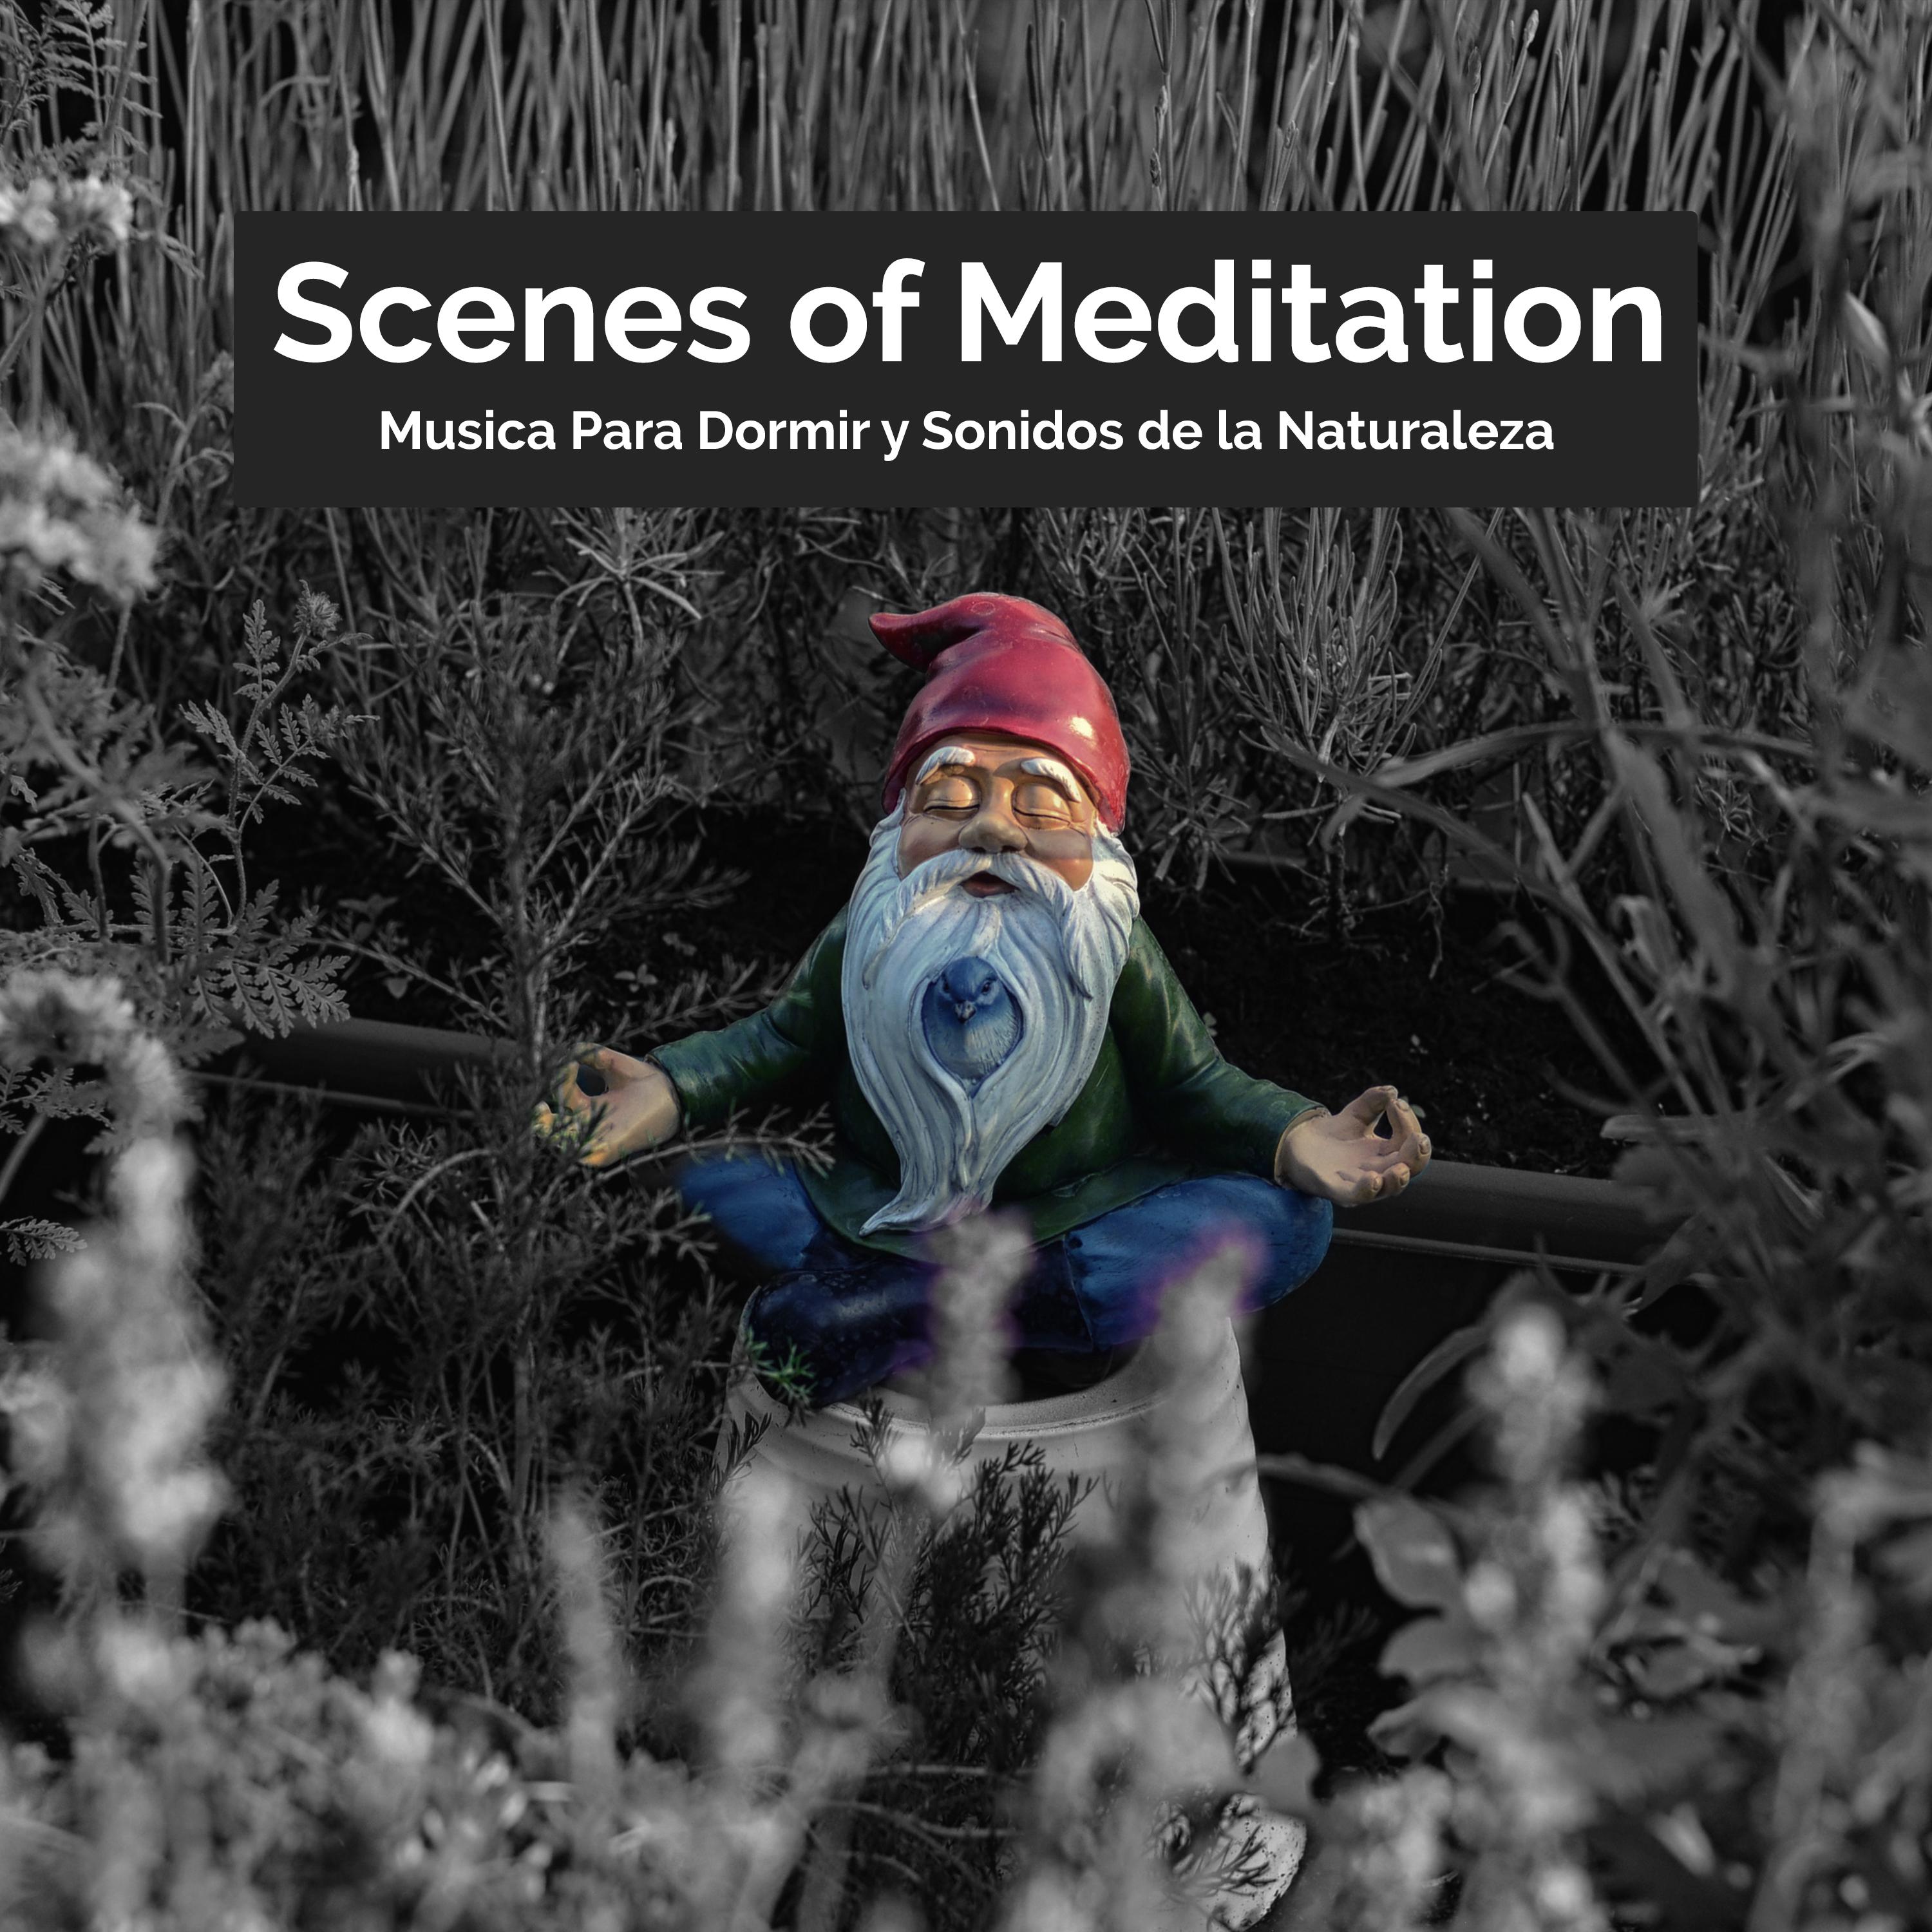 Scenes of Meditation